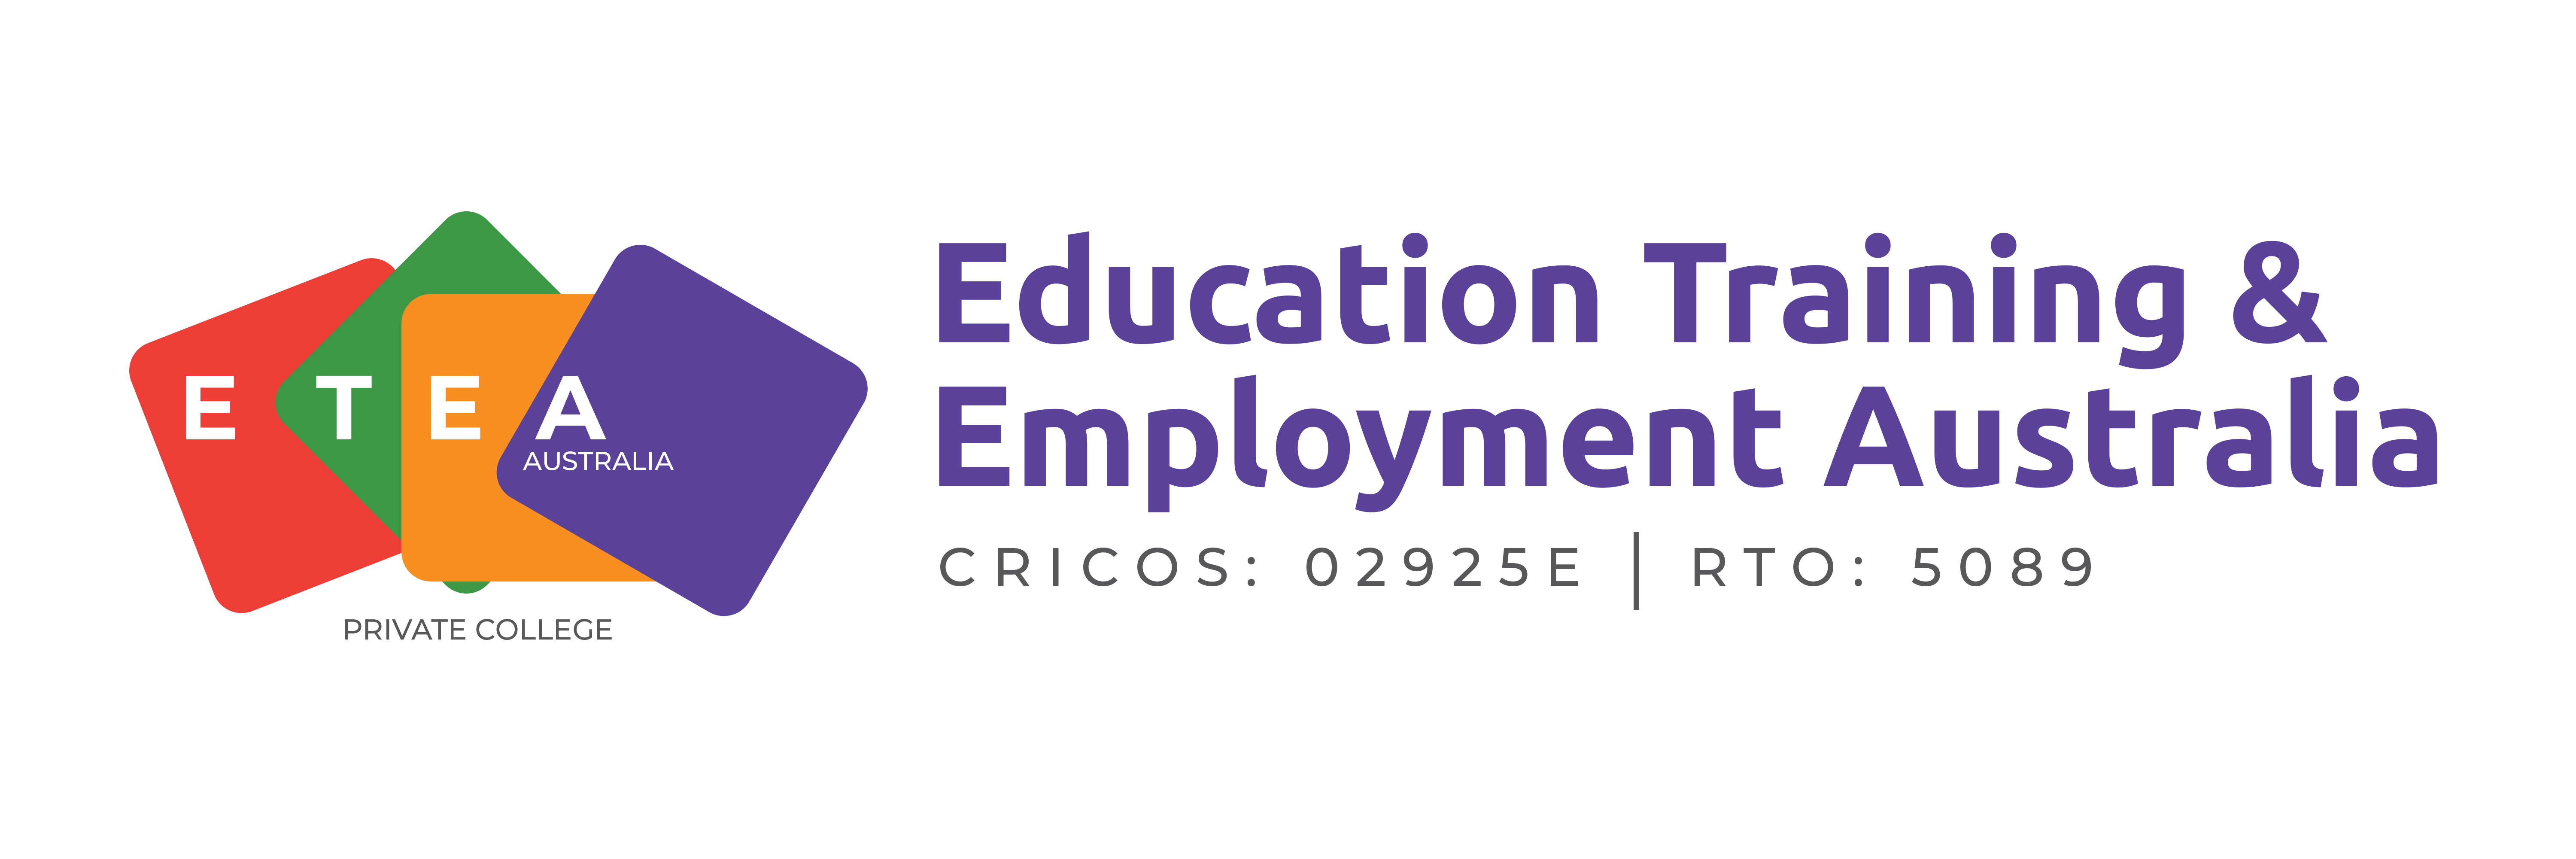 Education Training and Employment Australia (ETEA) Archives - Education Training and Employment Australia